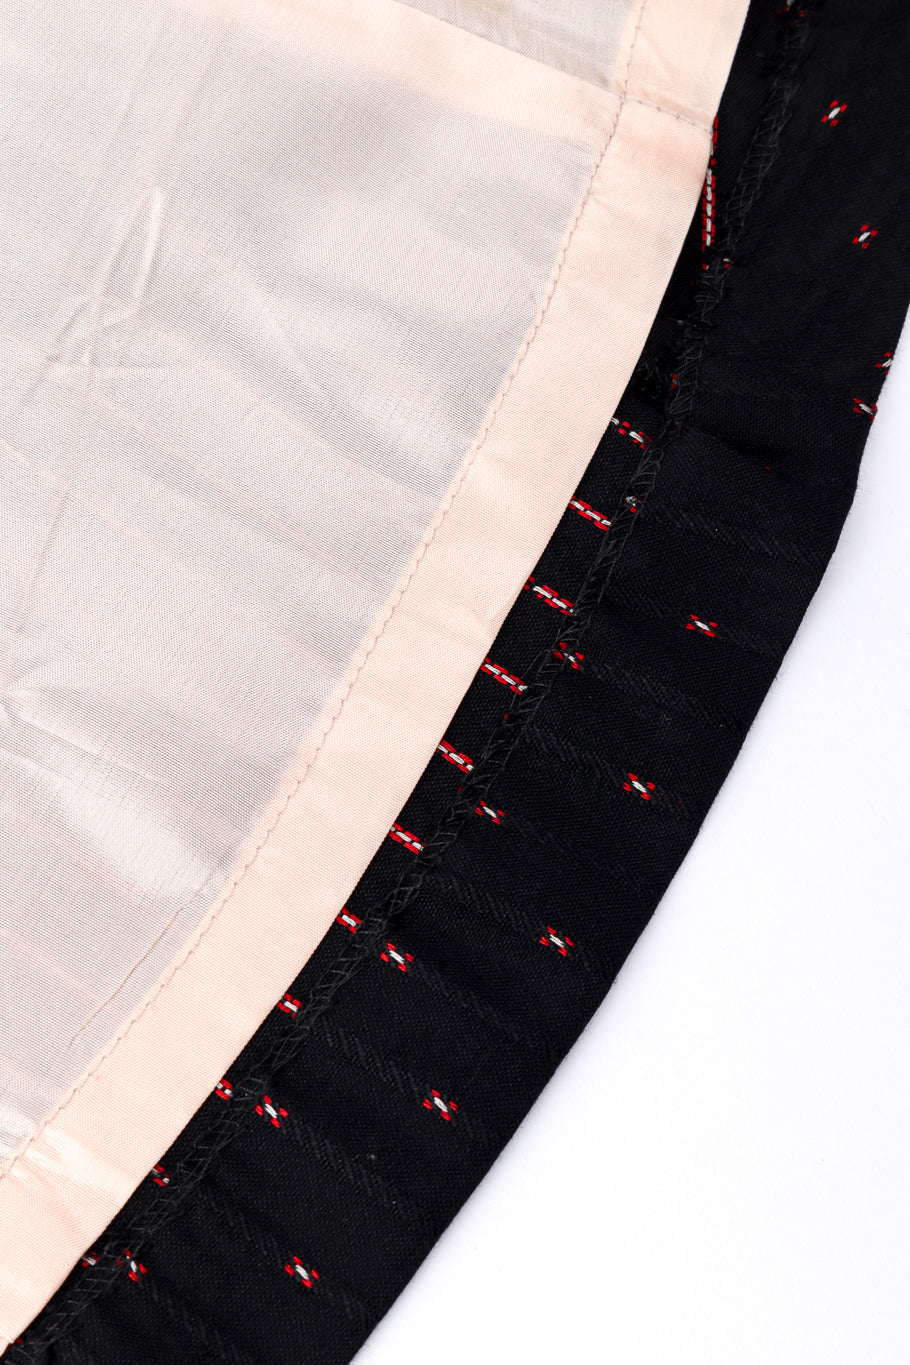 Peplum Flare Jacket & Skirt Suit by Vivienne Westwood skirt hems @recessla